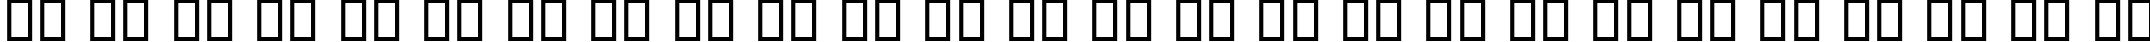 Пример написания английского алфавита шрифтом B Roya